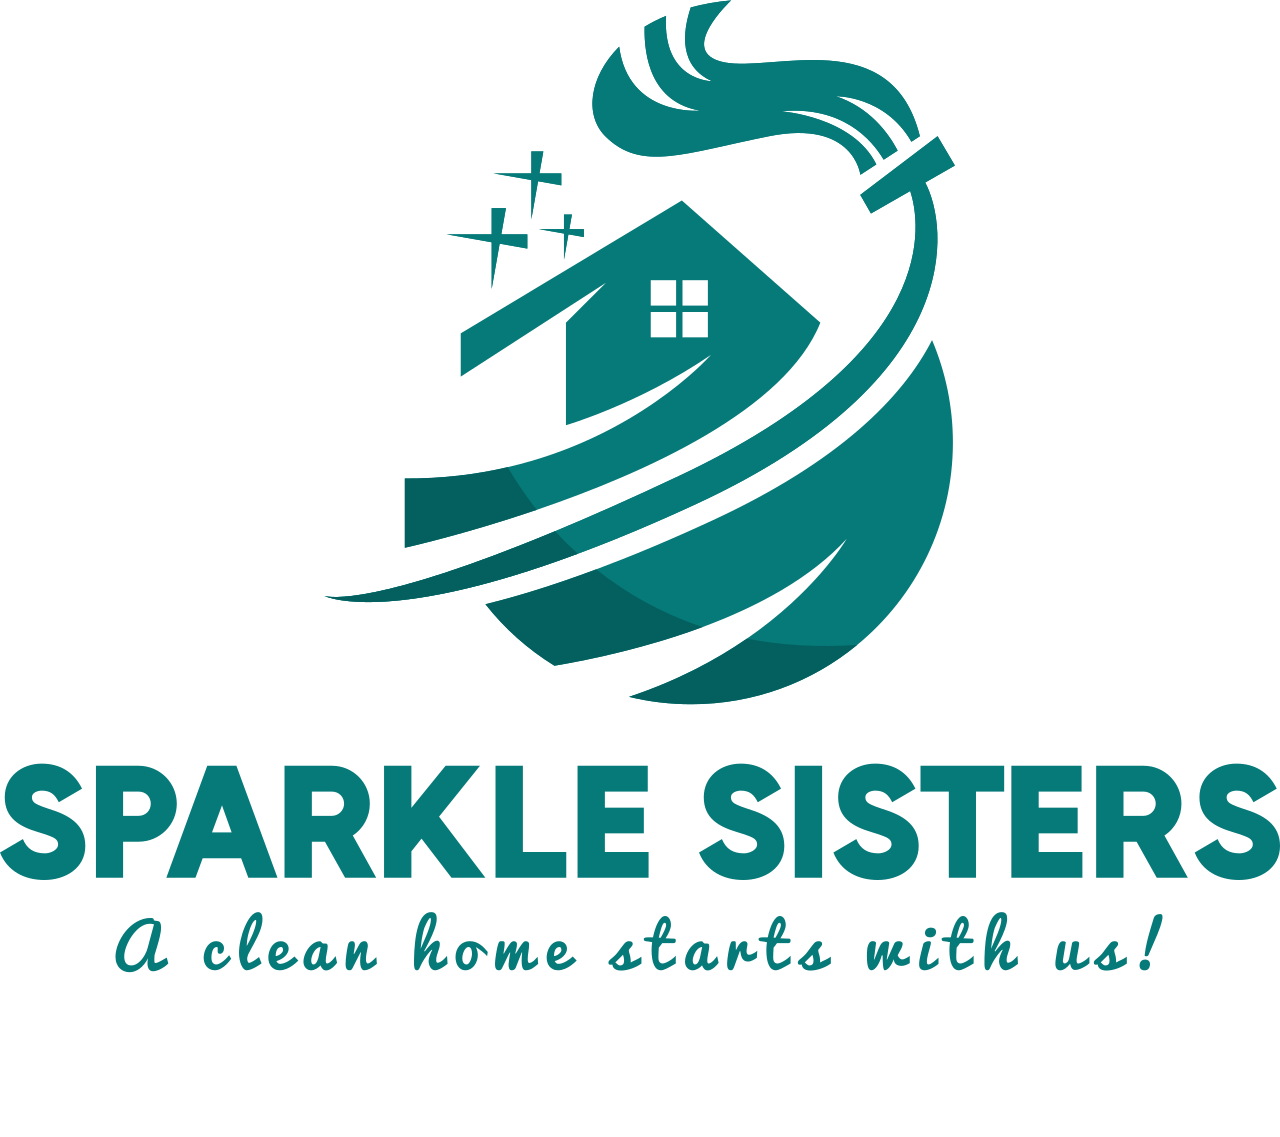 Sparkle Sisters's logo